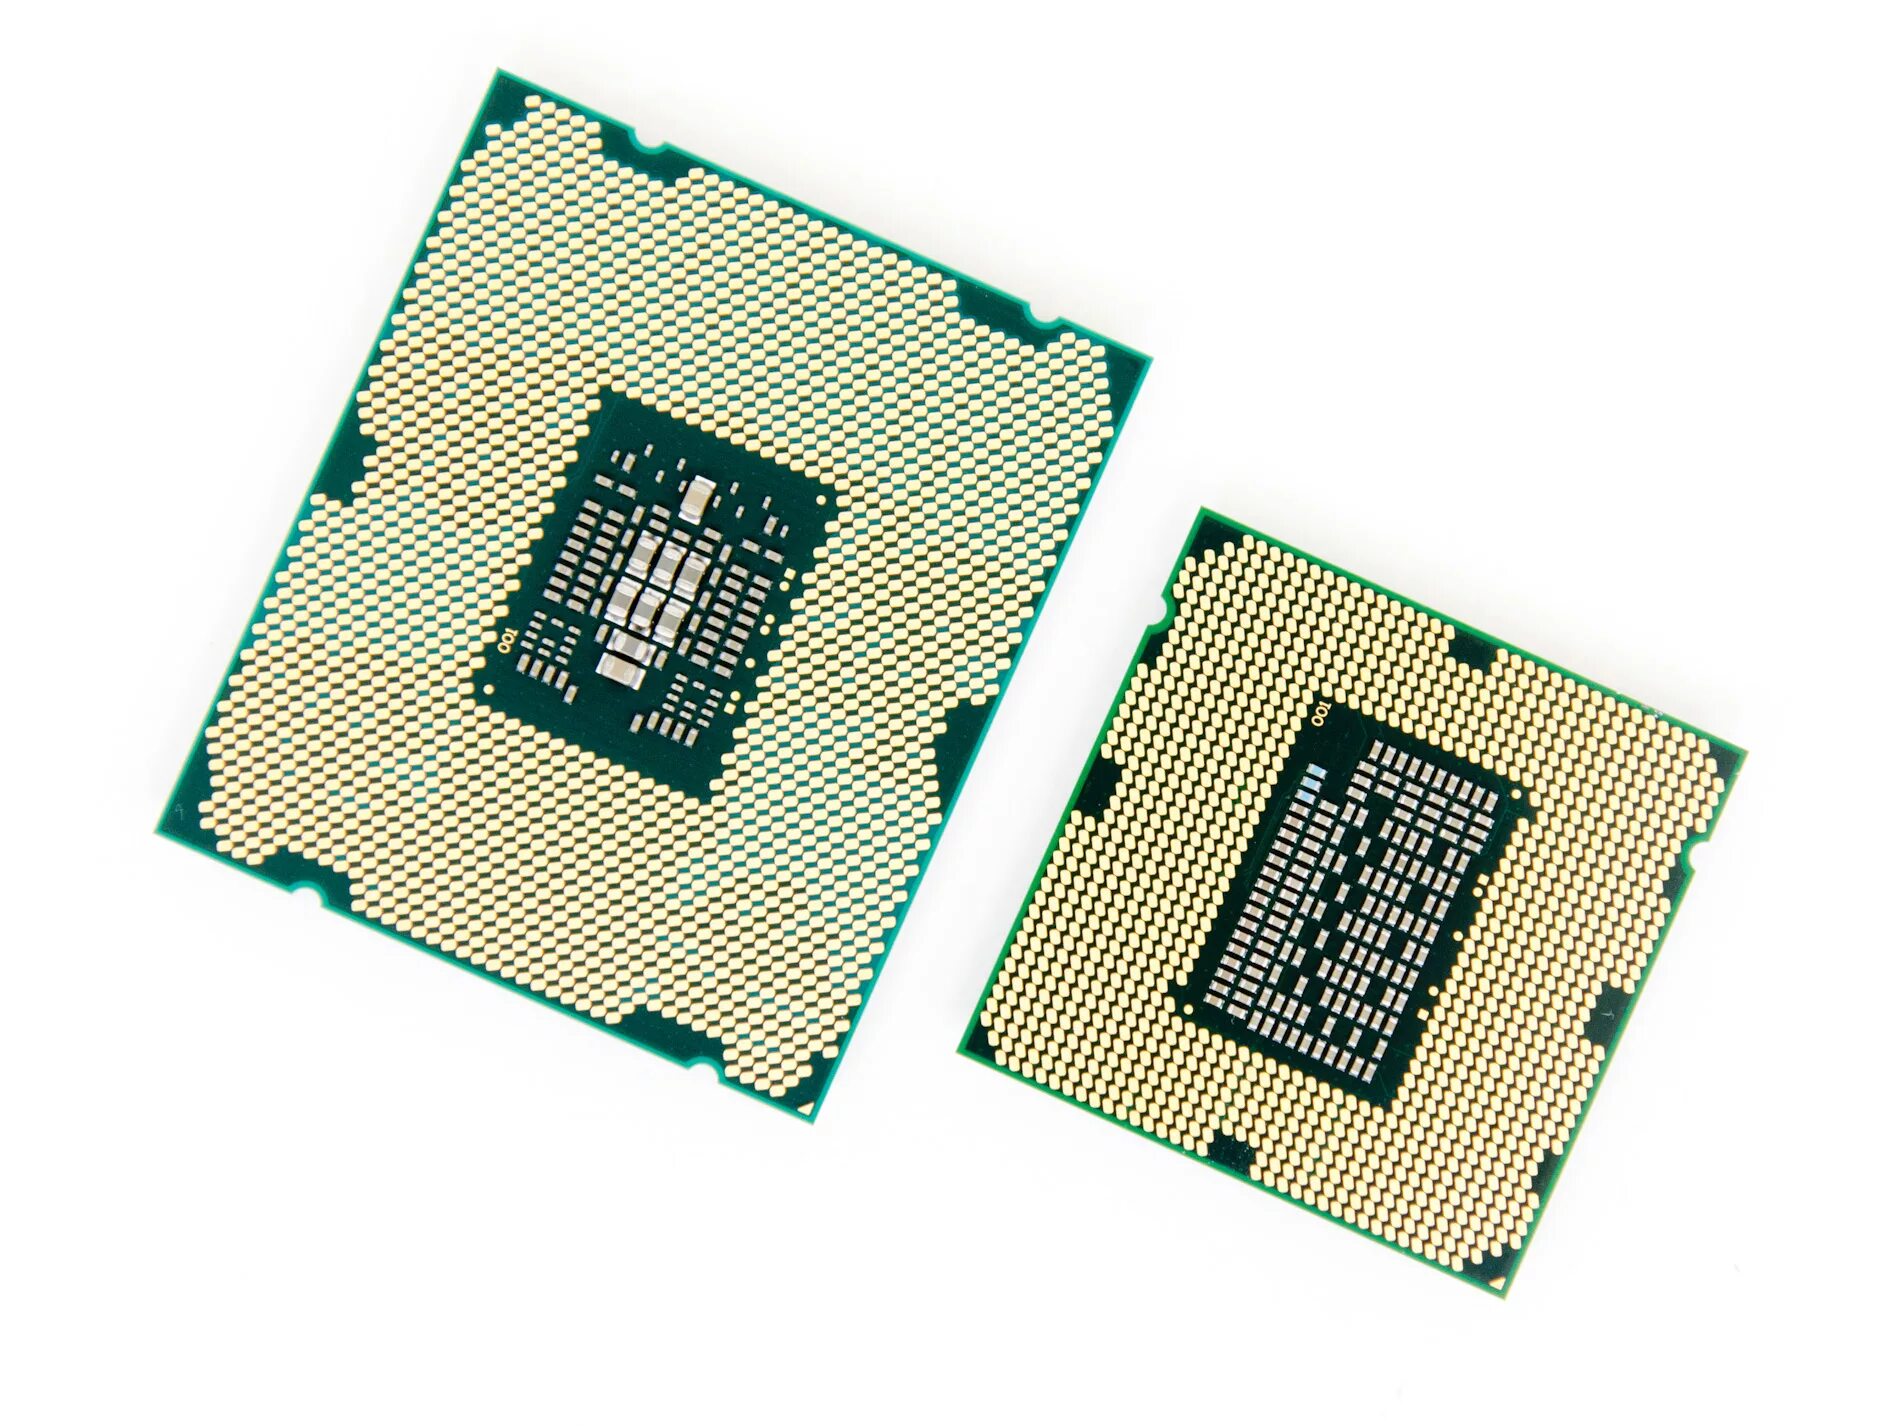 Socket 1155 процессоры. Intel Core i7-3820 Malay. Процессор 3820 Intel Core i7. I7 2011 сокет. LGA 1155 i7.